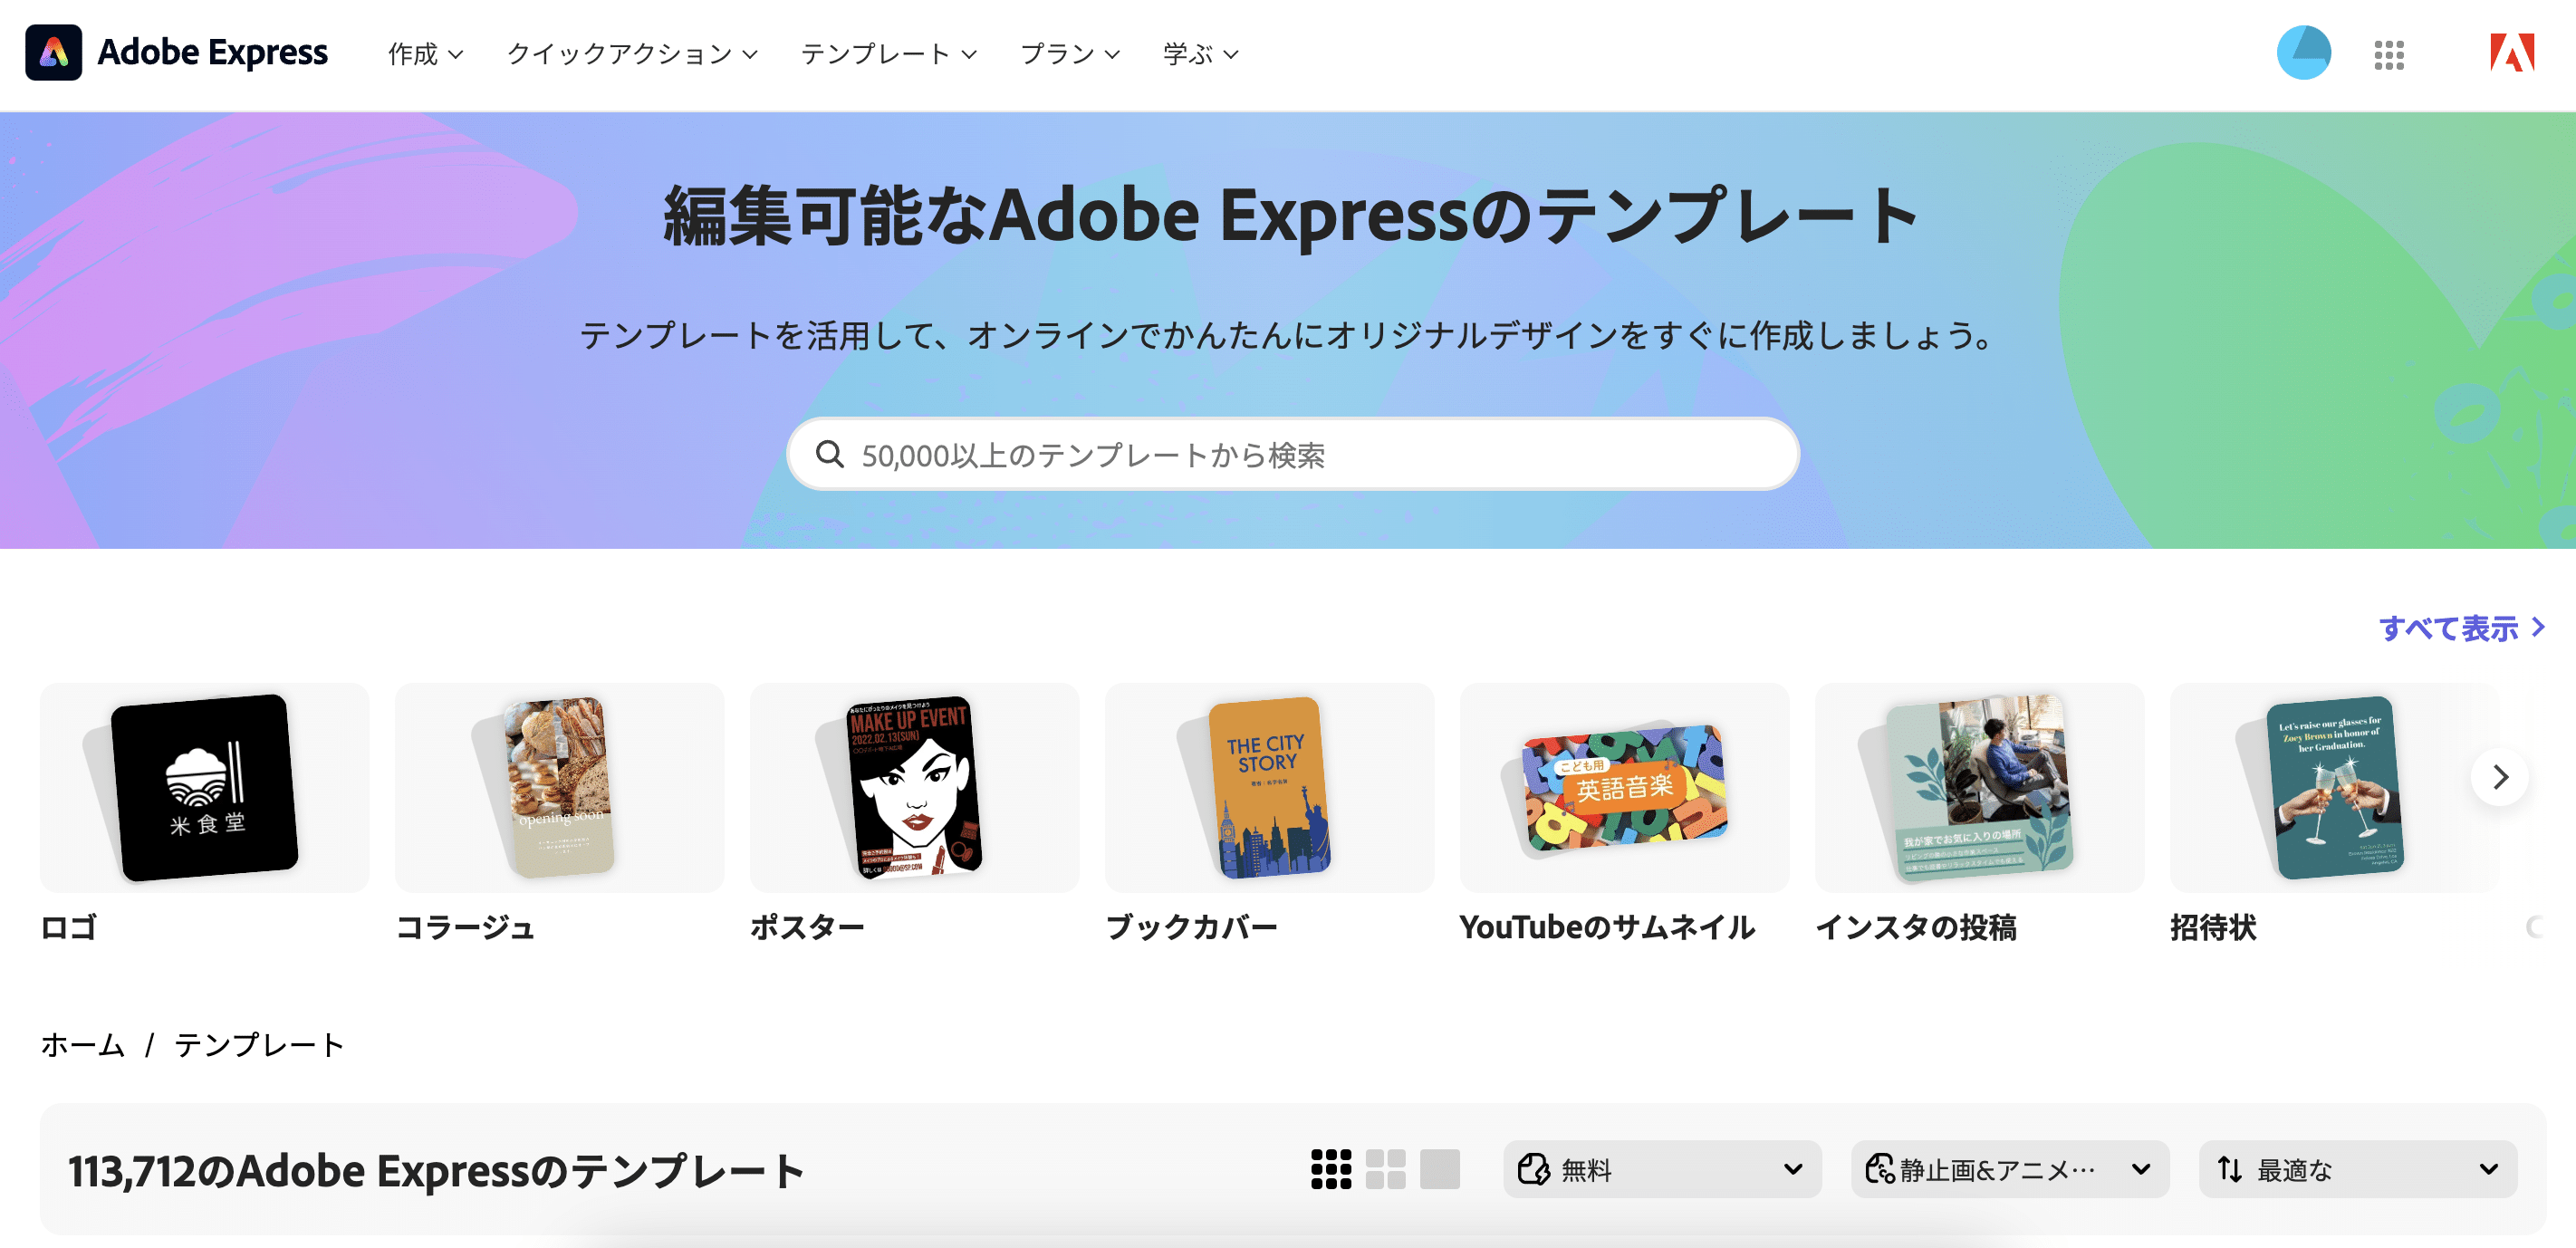 Adobe Expressにアクセスをする